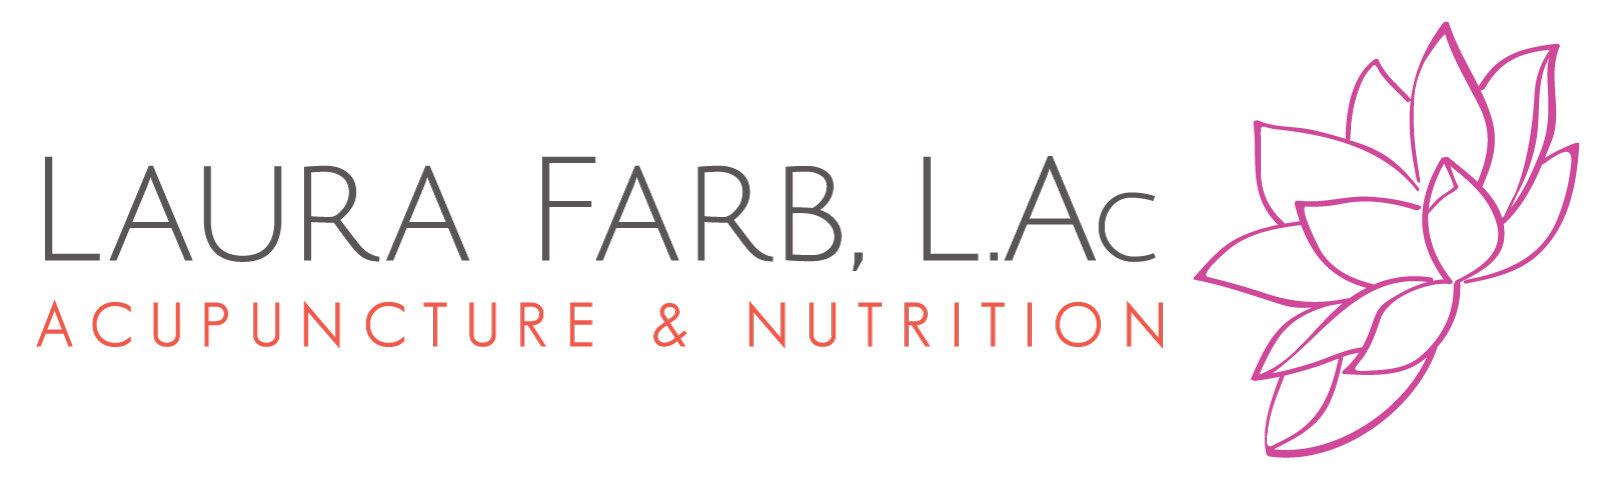 Laura Farb, L.Ac.: Acupuncture & Nutrition Austin TX